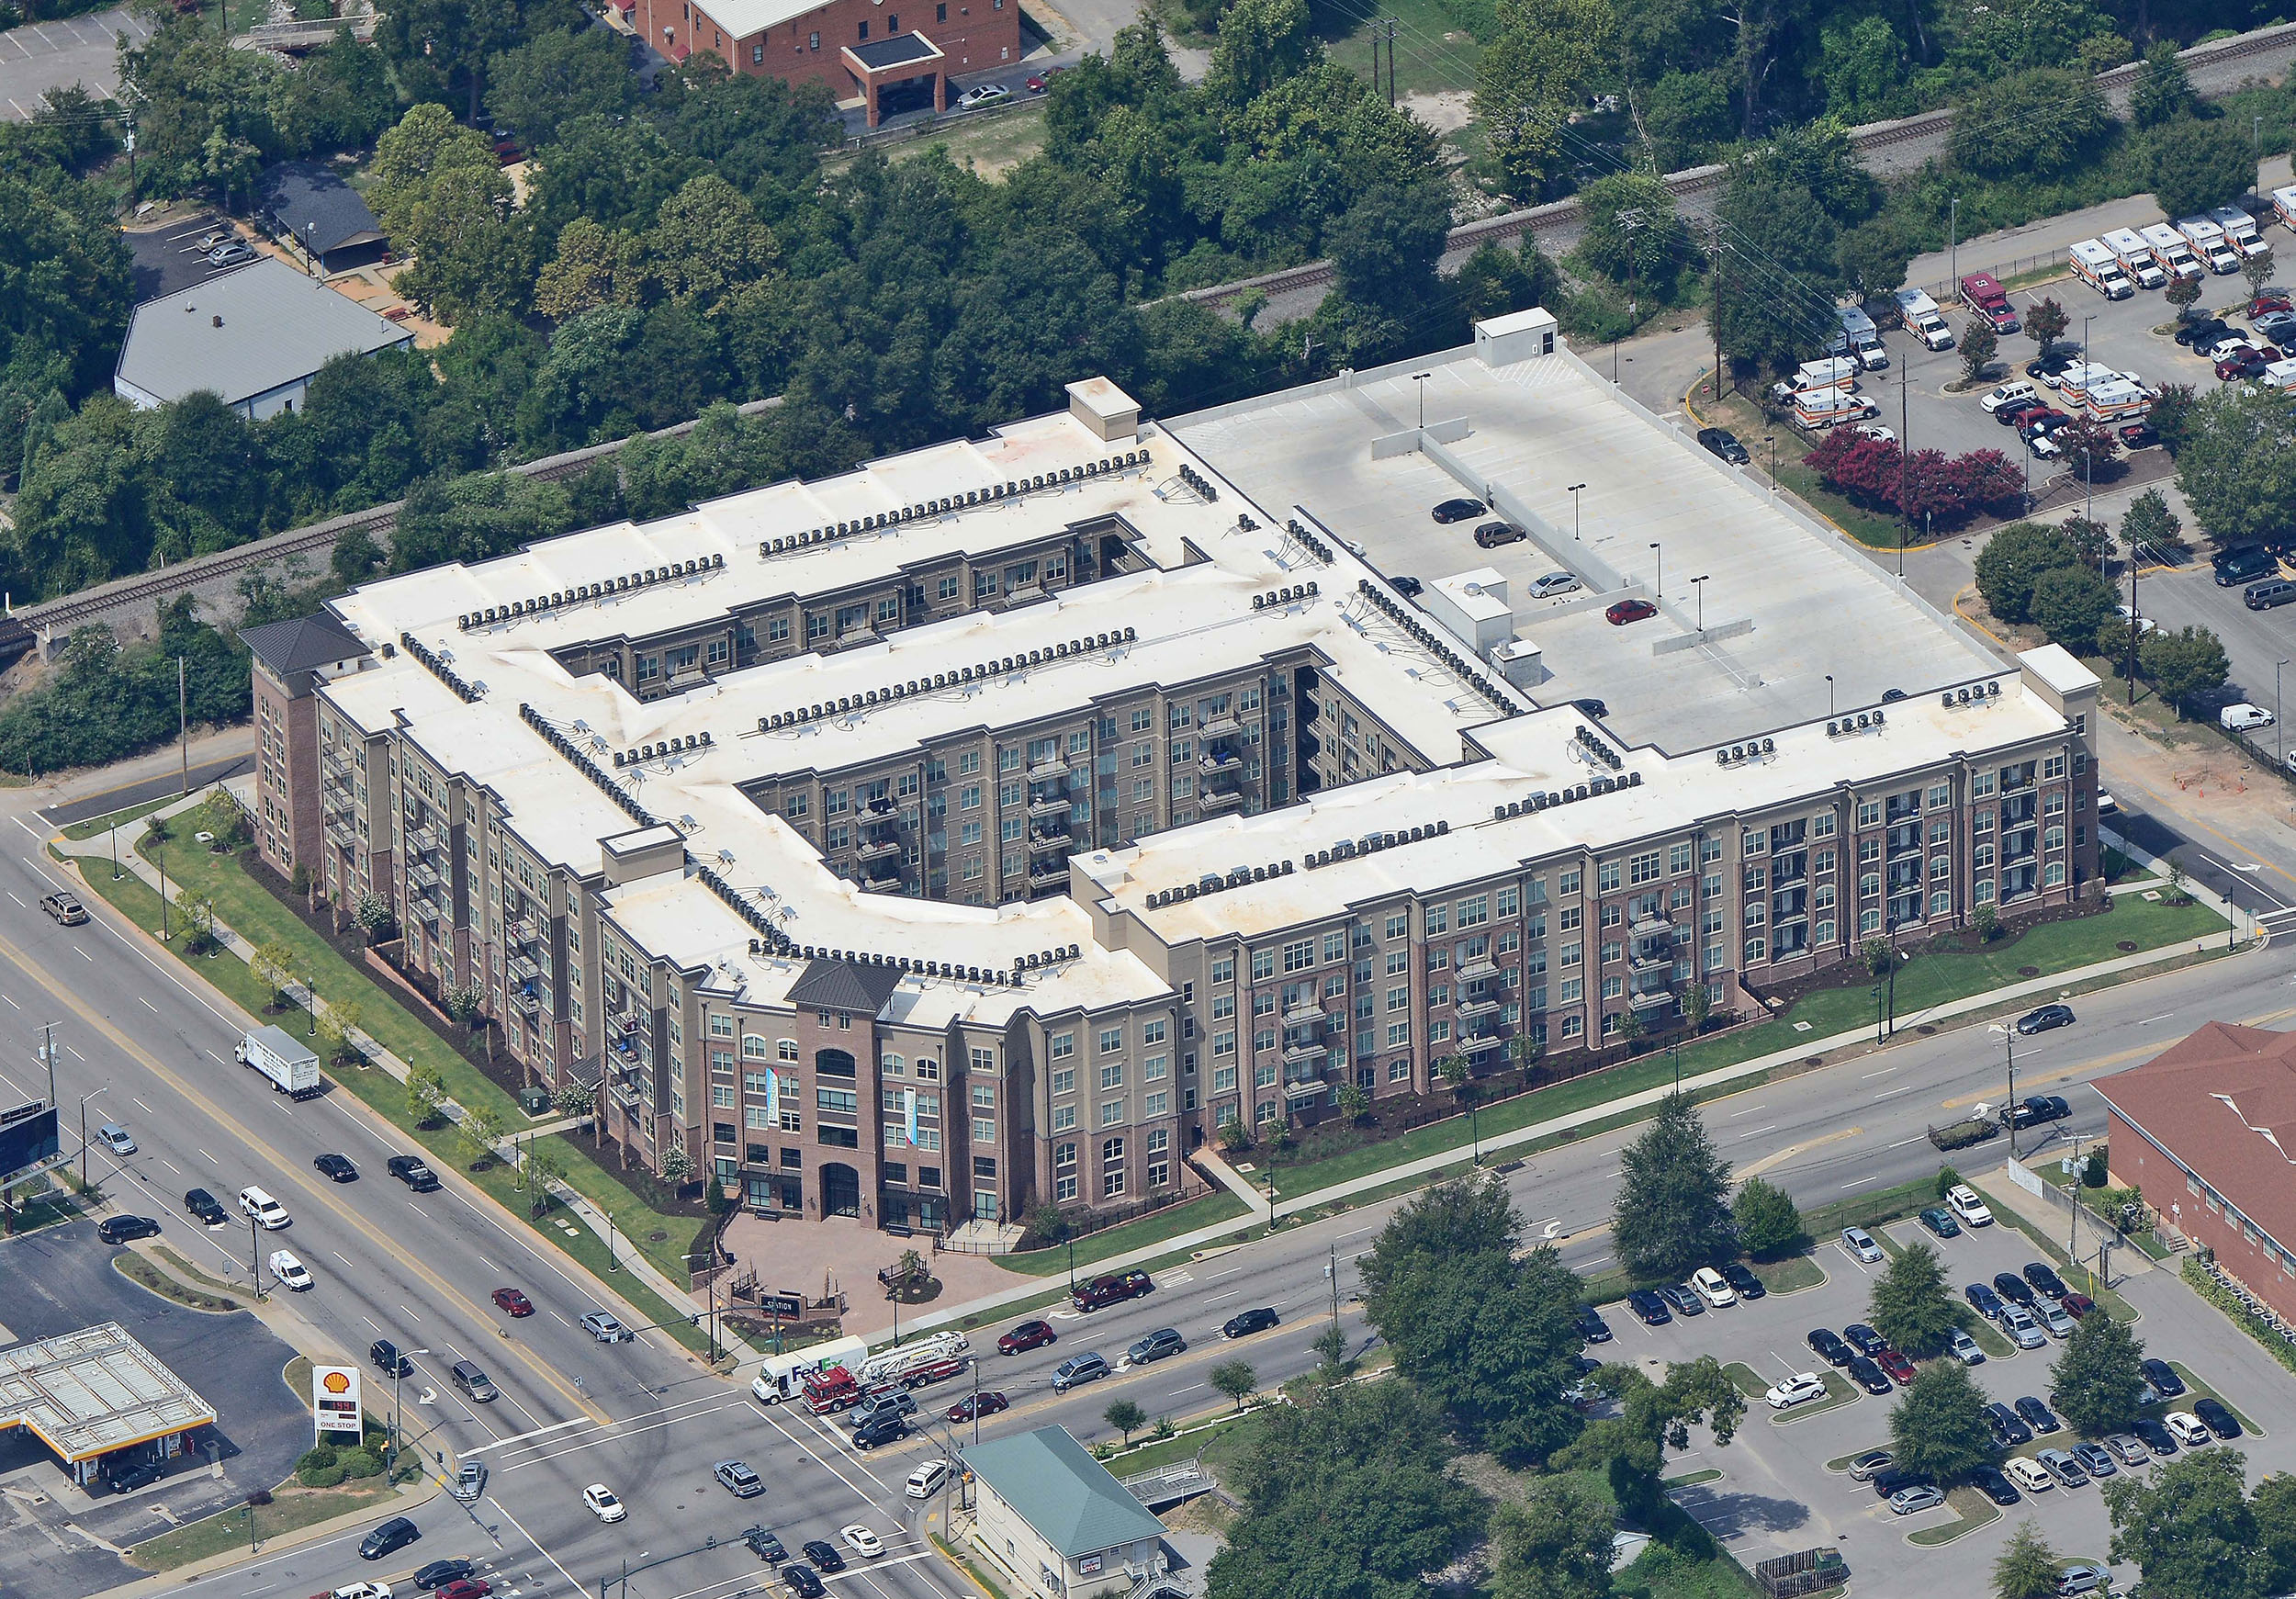 aerial shot of brick Multi level student housing